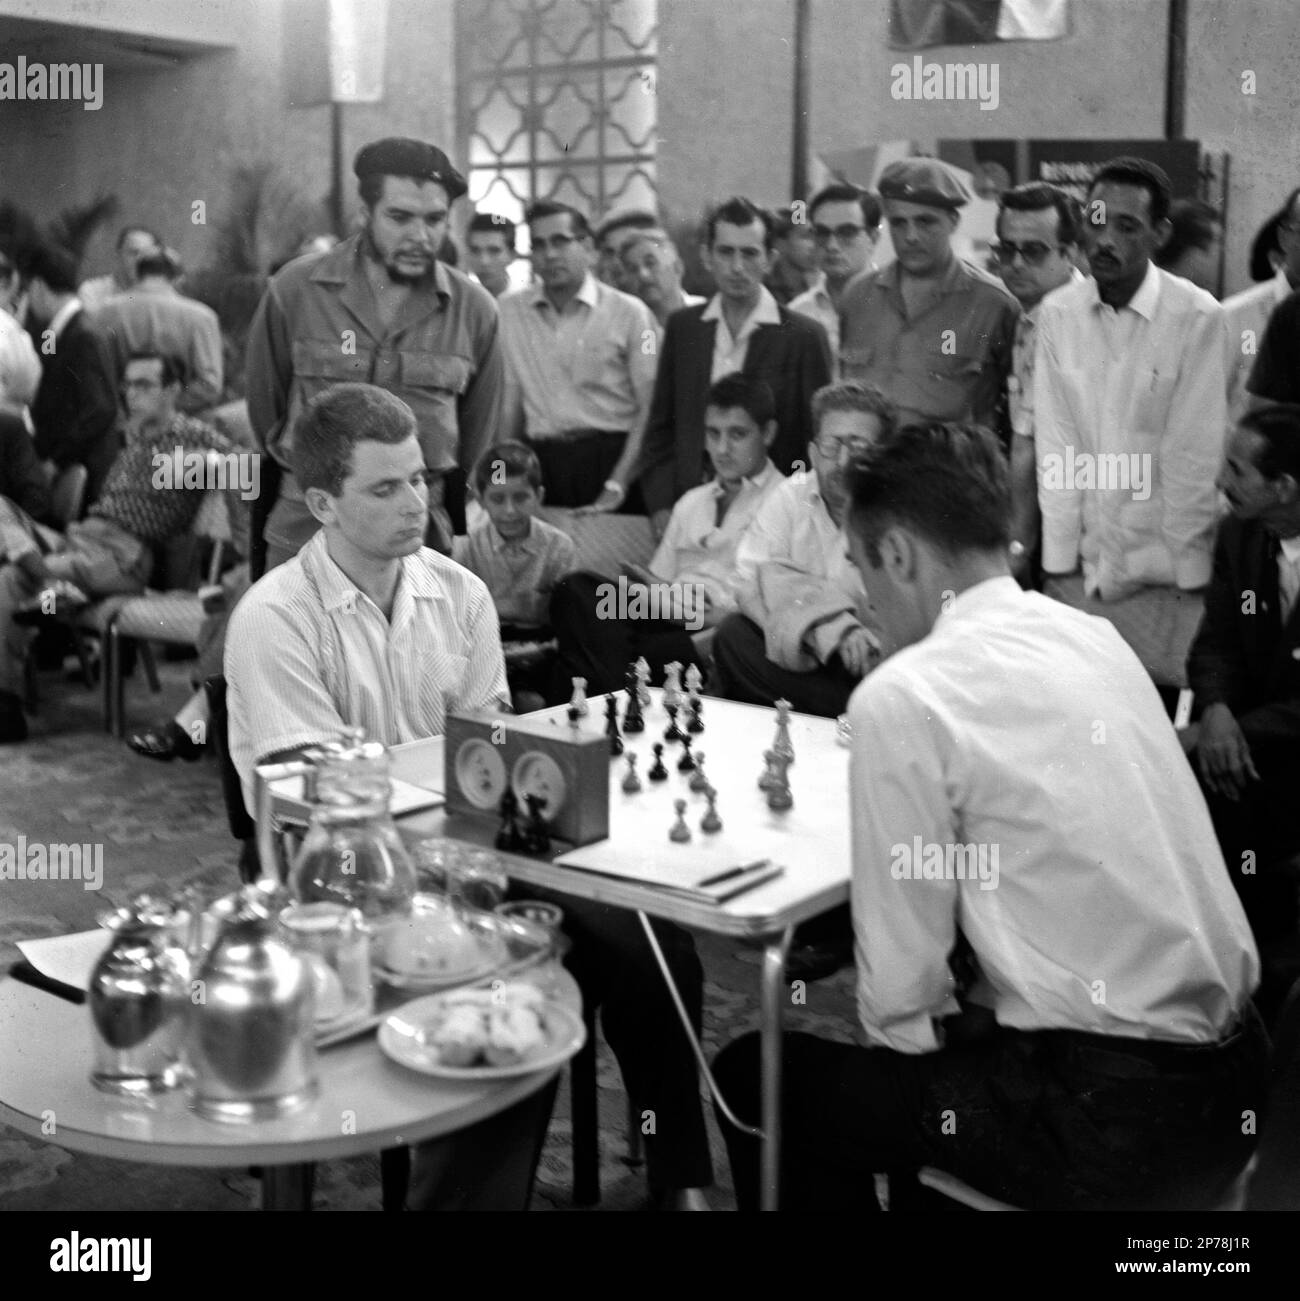 The chess games of Ernesto Guevara